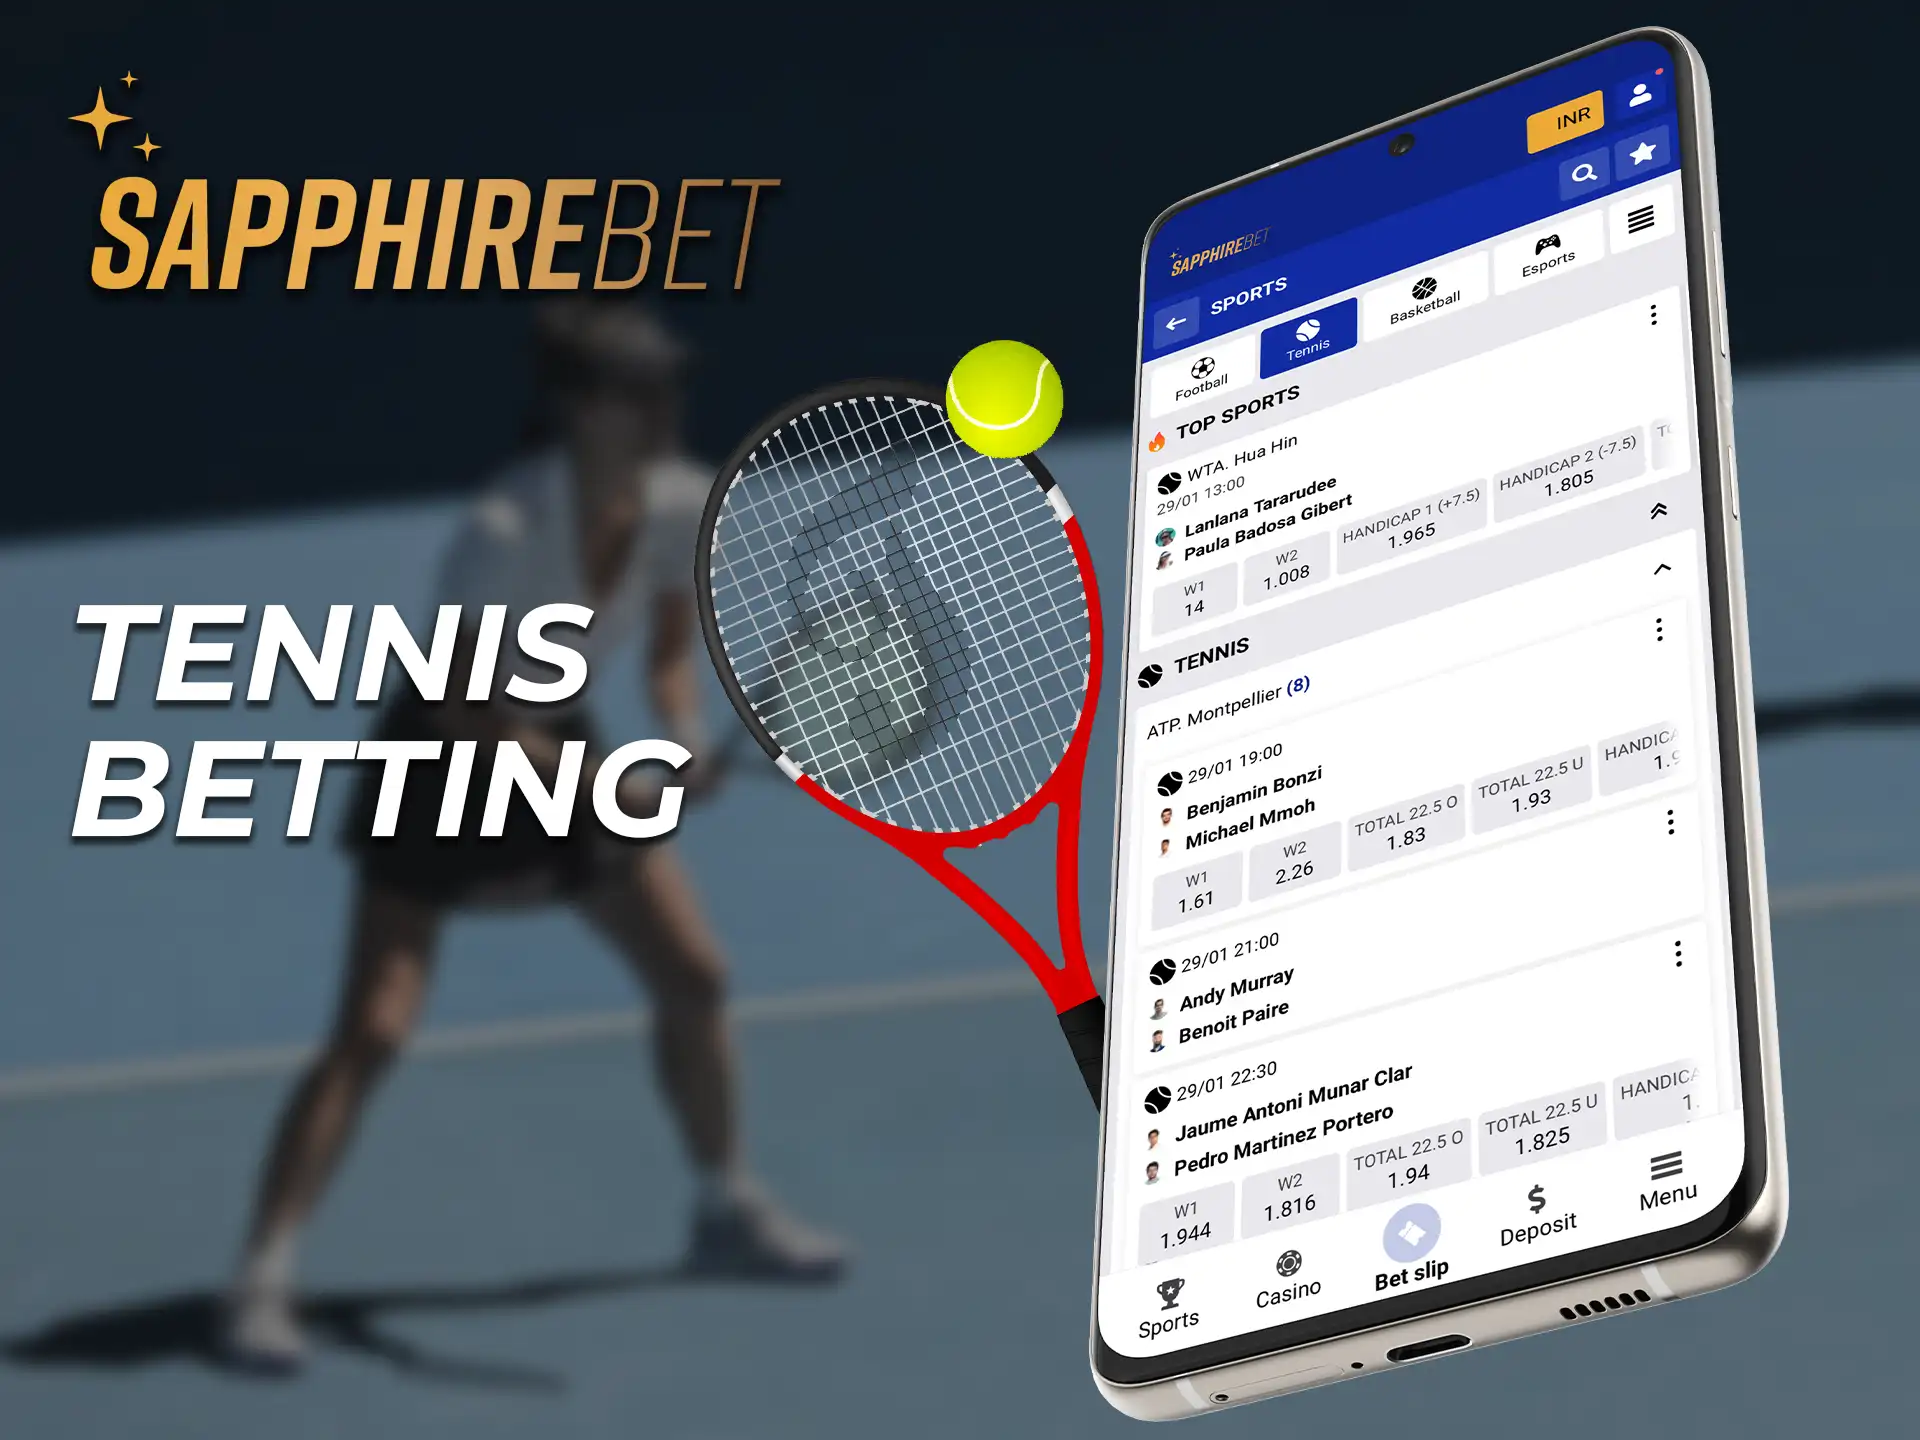 Tennis betting on the SapphireBet app.